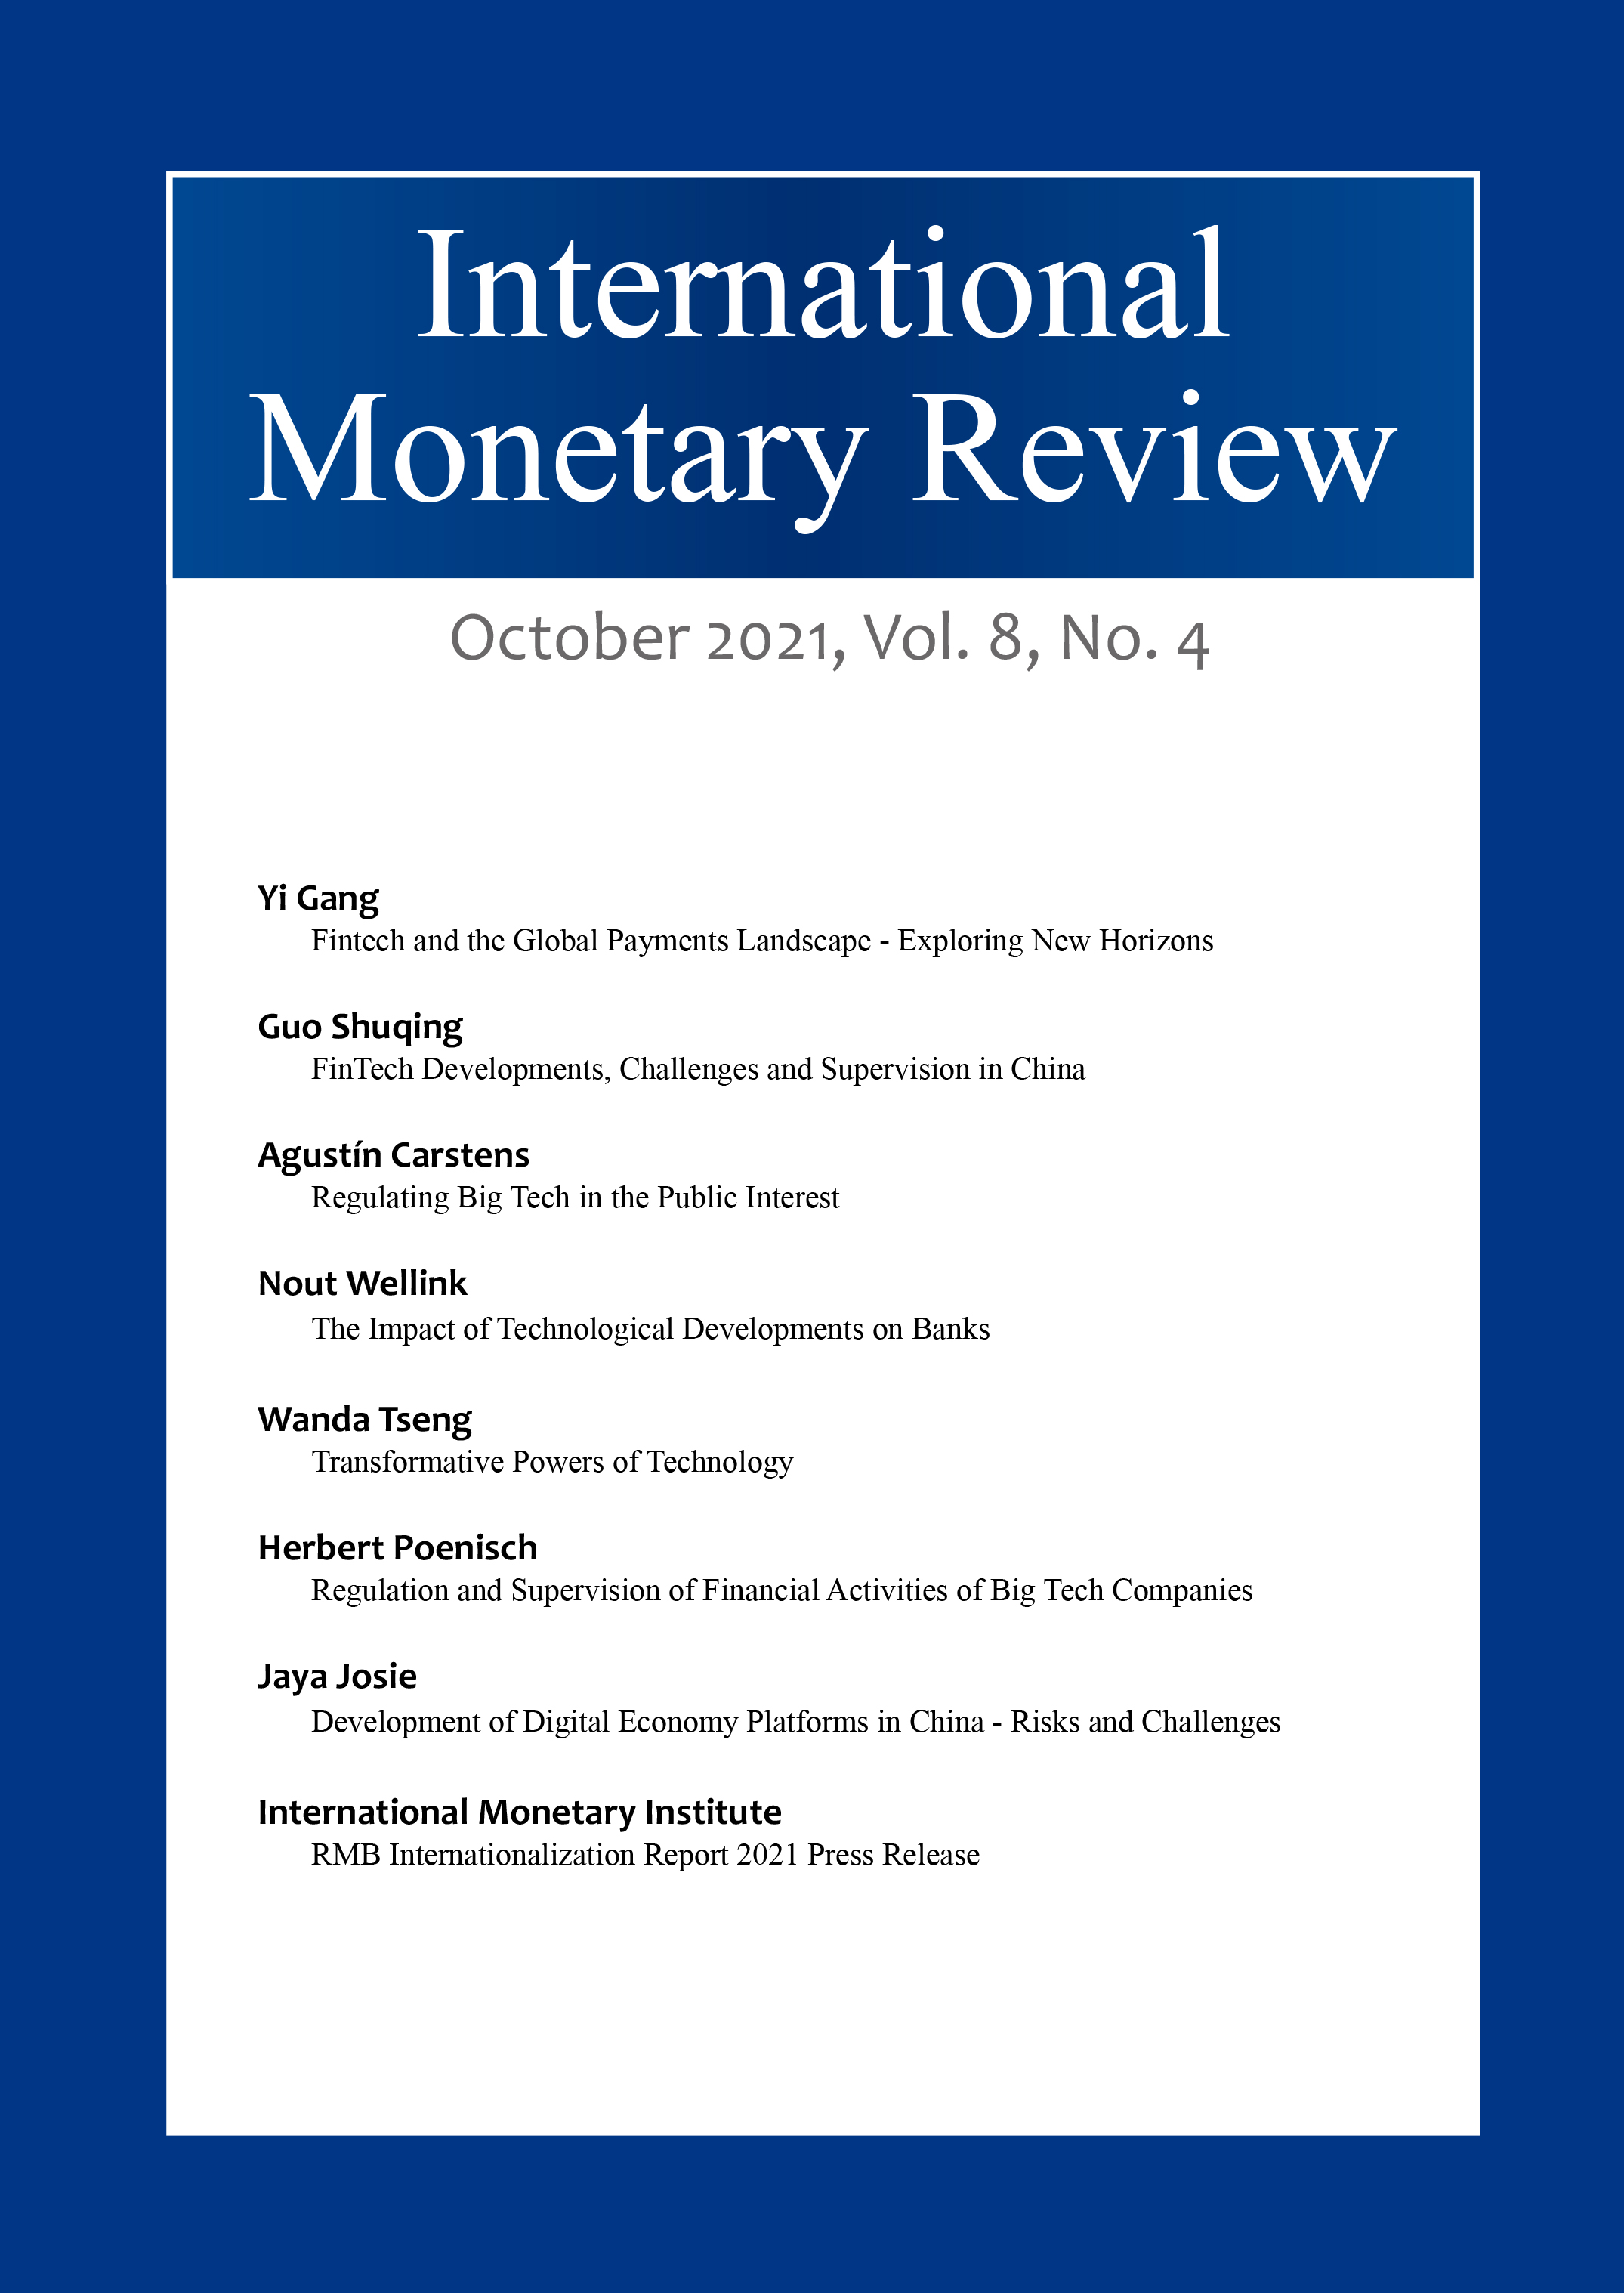 International Monetary Review, October 2021, Vol.8 No.4